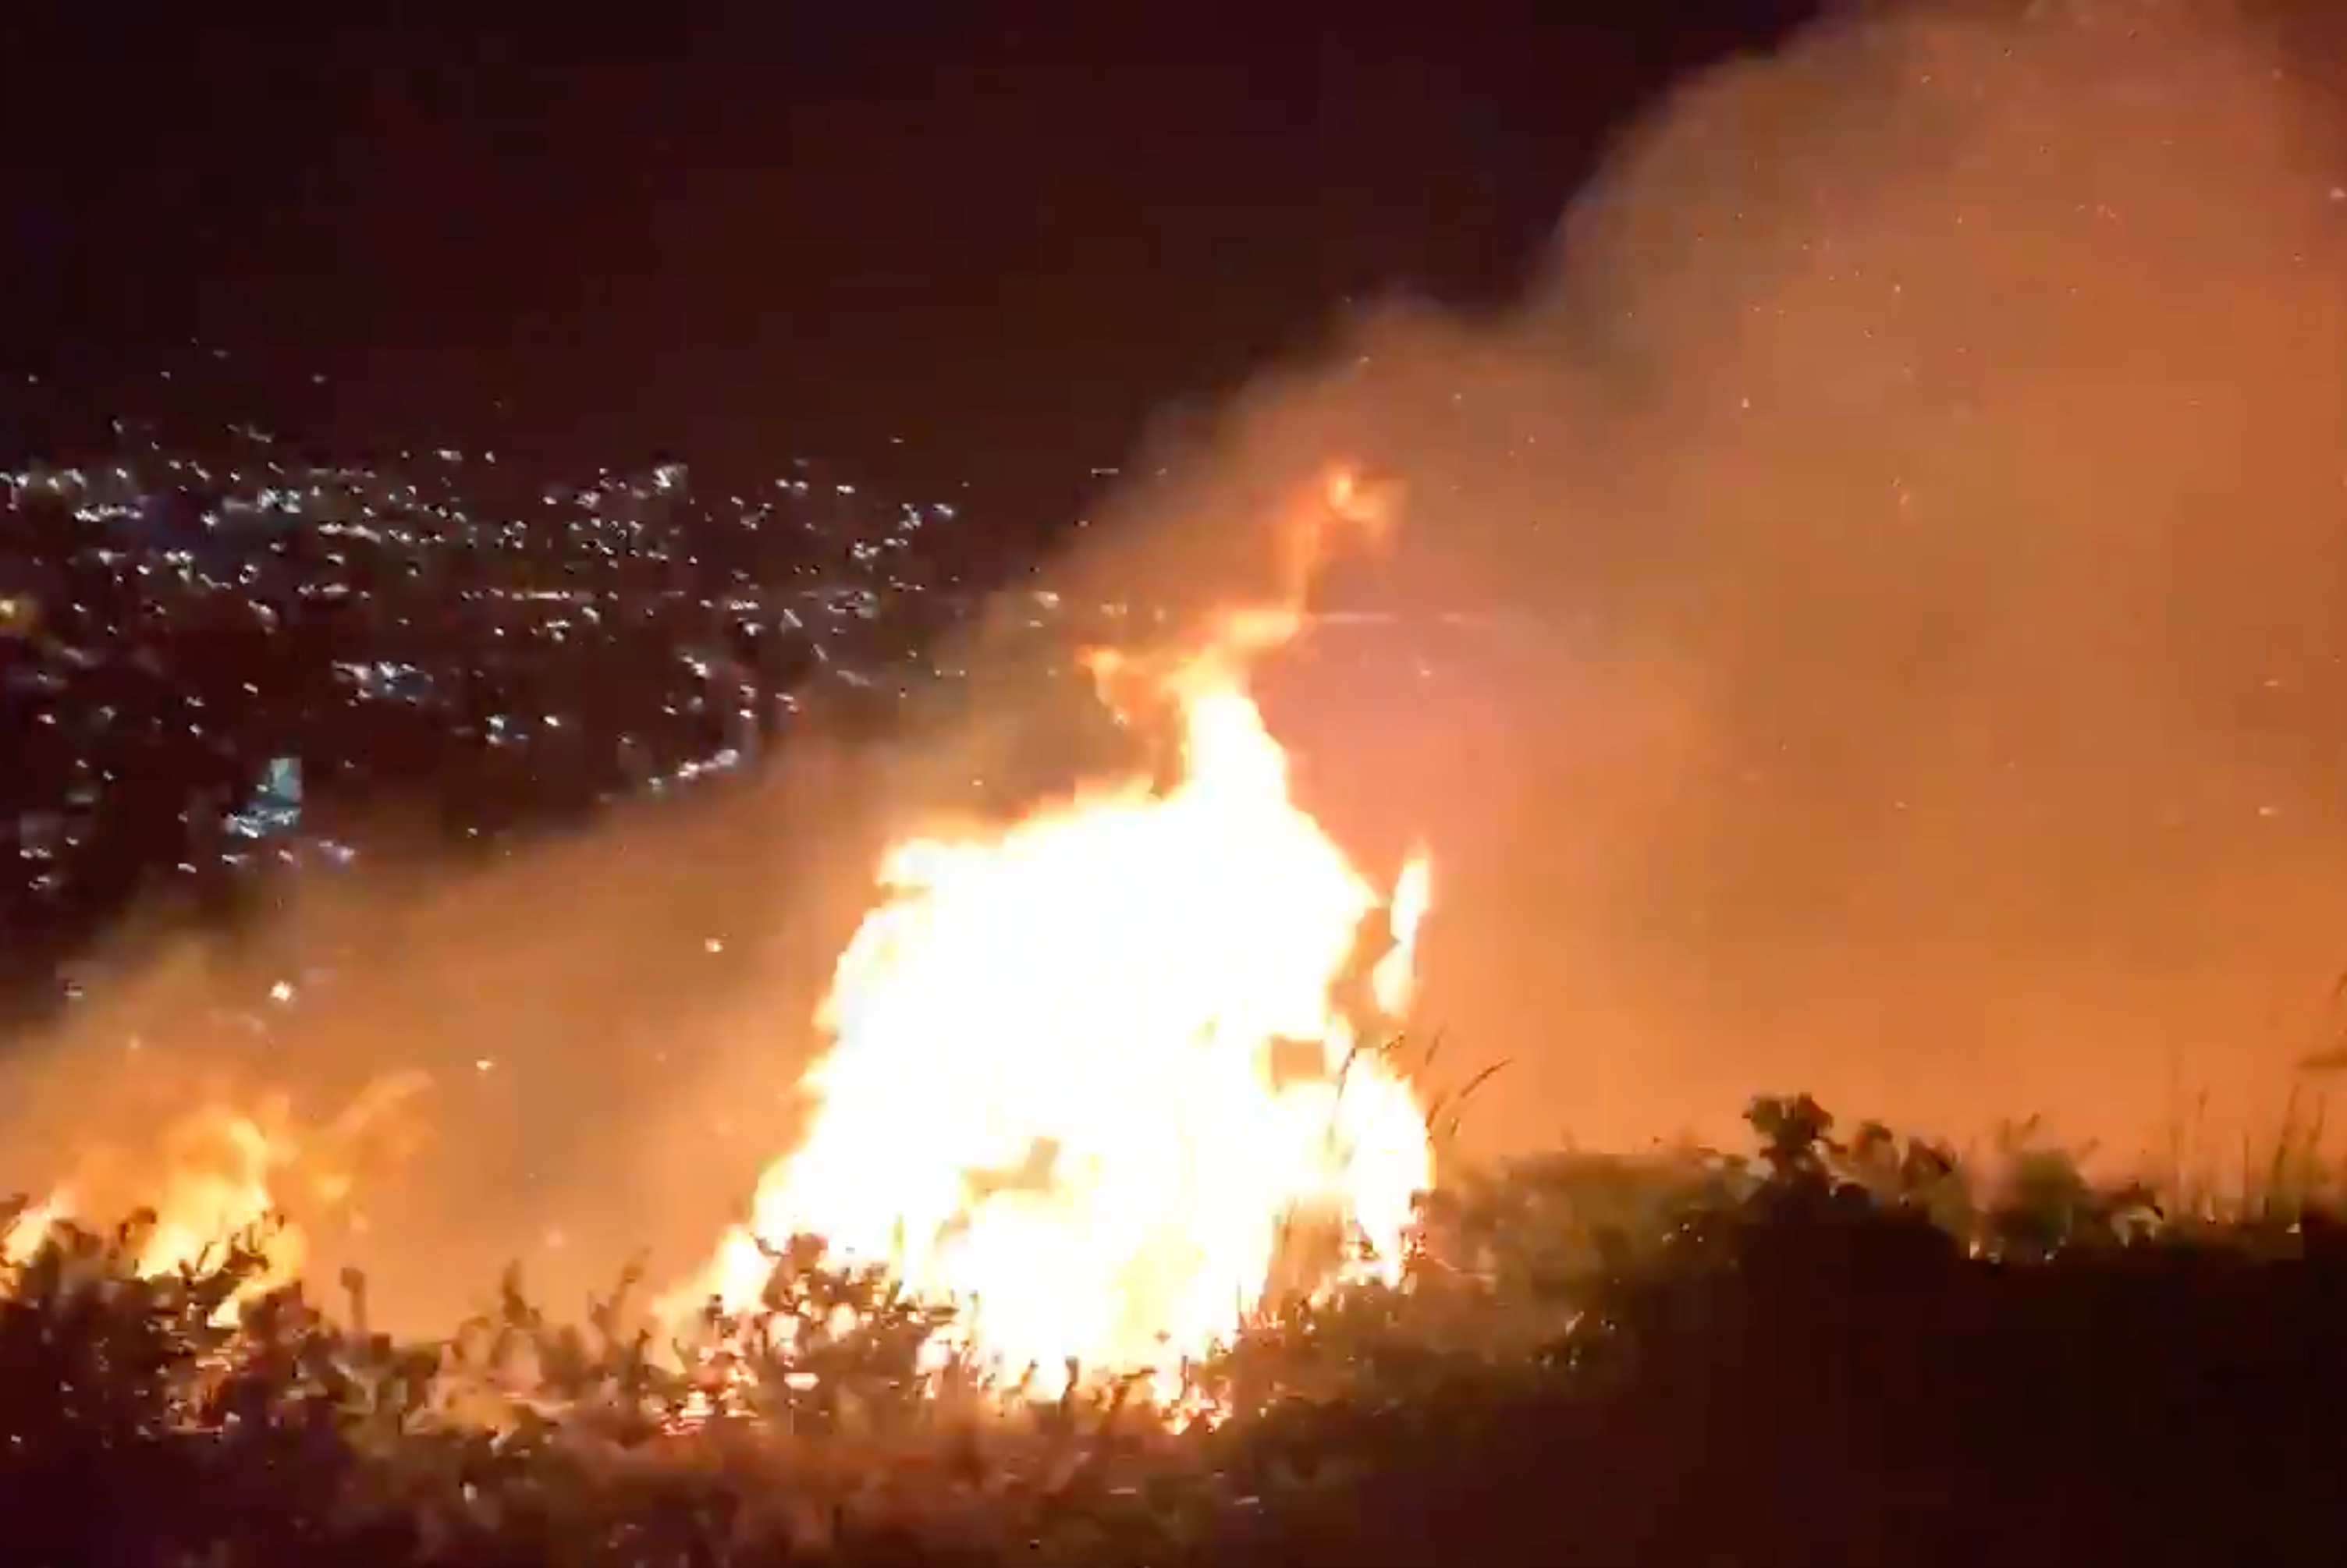 The Loma Fire creeps up dangerously close to the KEYT-TV station in Santa Barbara, California